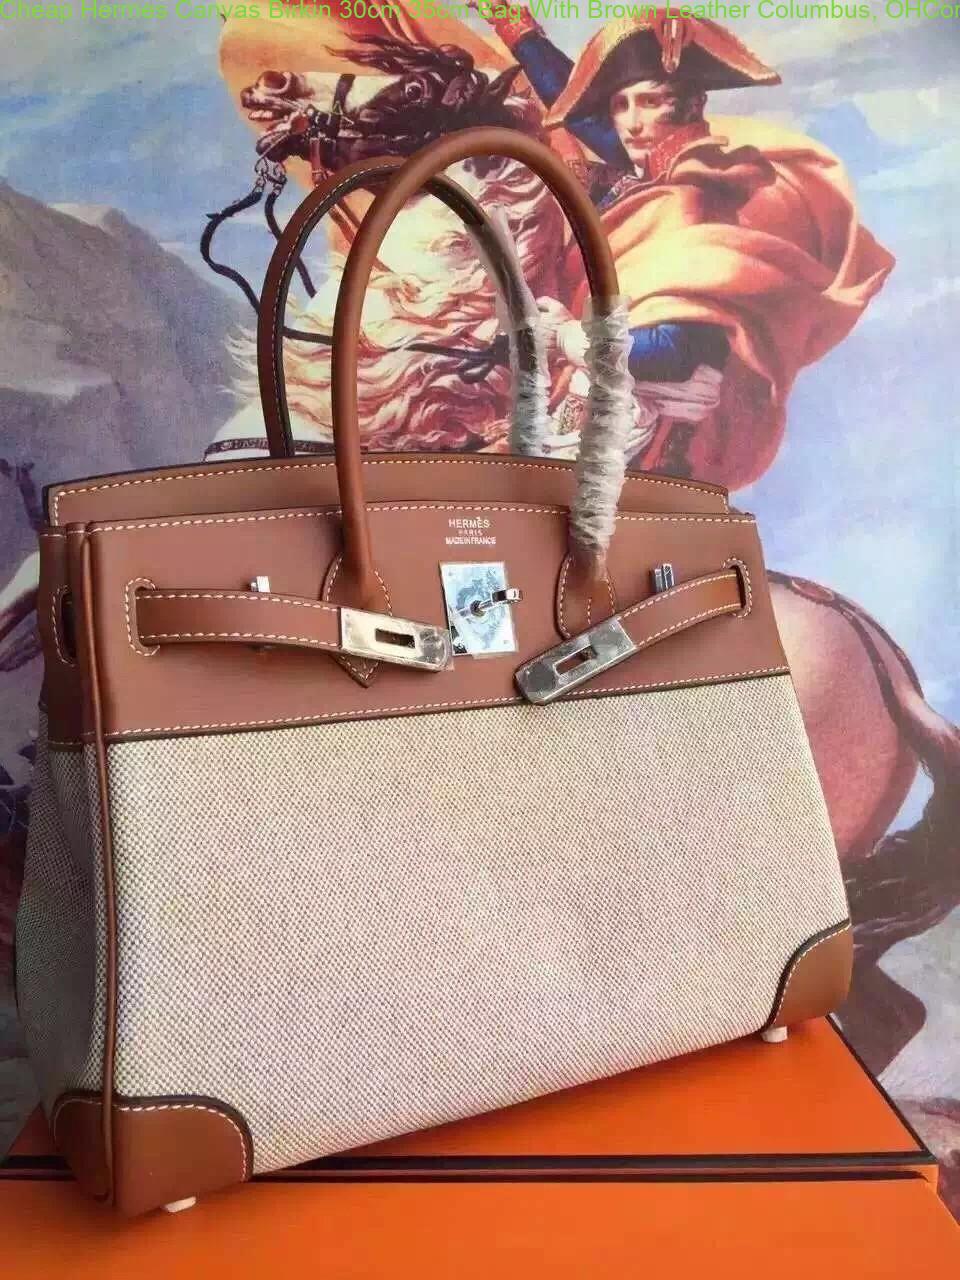 Cheap Hermes Canvas Birkin 30cm 35cm Bag With Brown Leather Columbus, OHCorpus Christi, TX ...